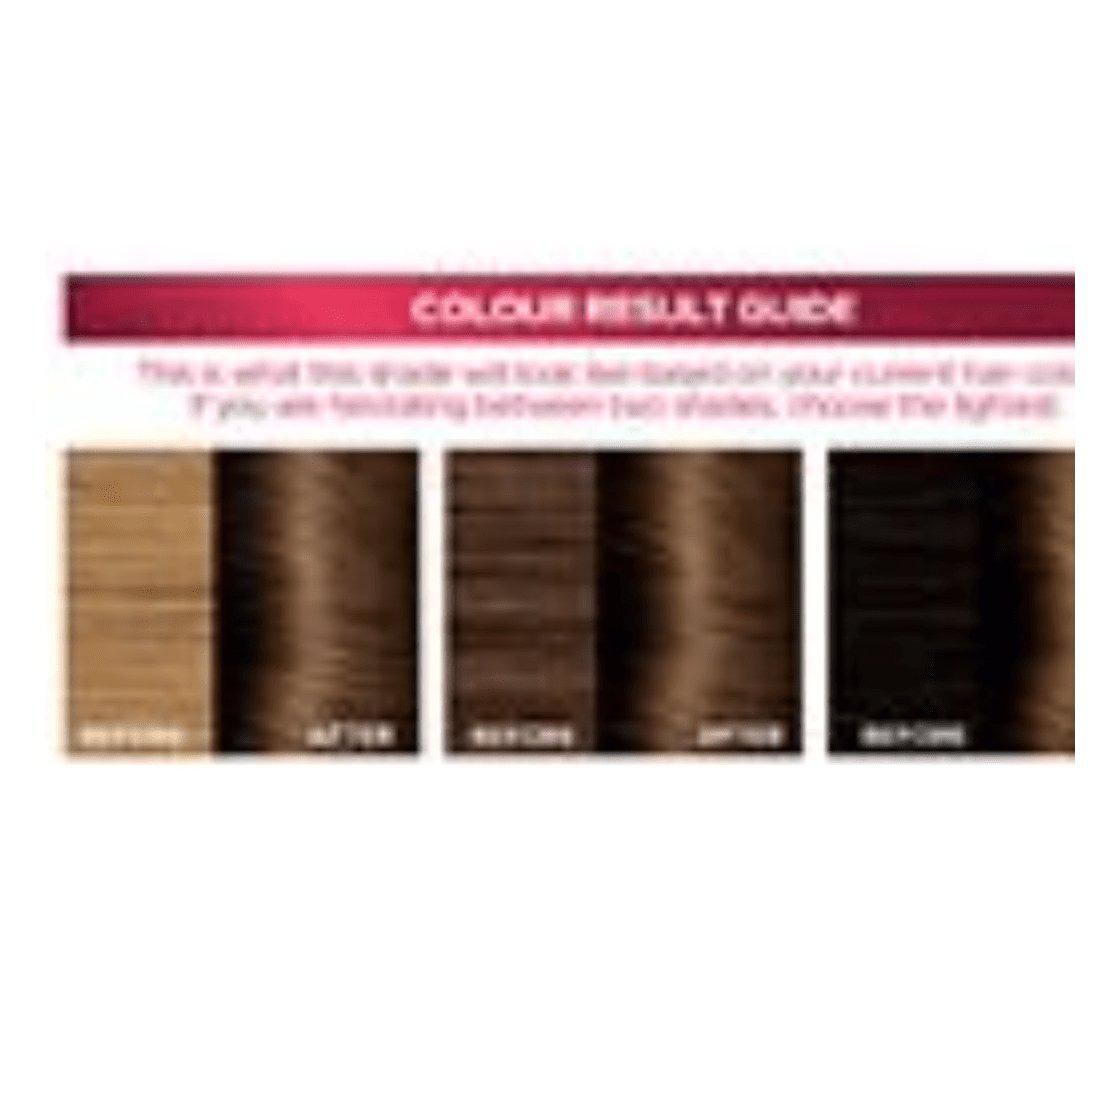 L'oreal Excellence Crème Permanent Hair Dye - Triple Care, Natural Light Brown 6 - Healthxpress.ie